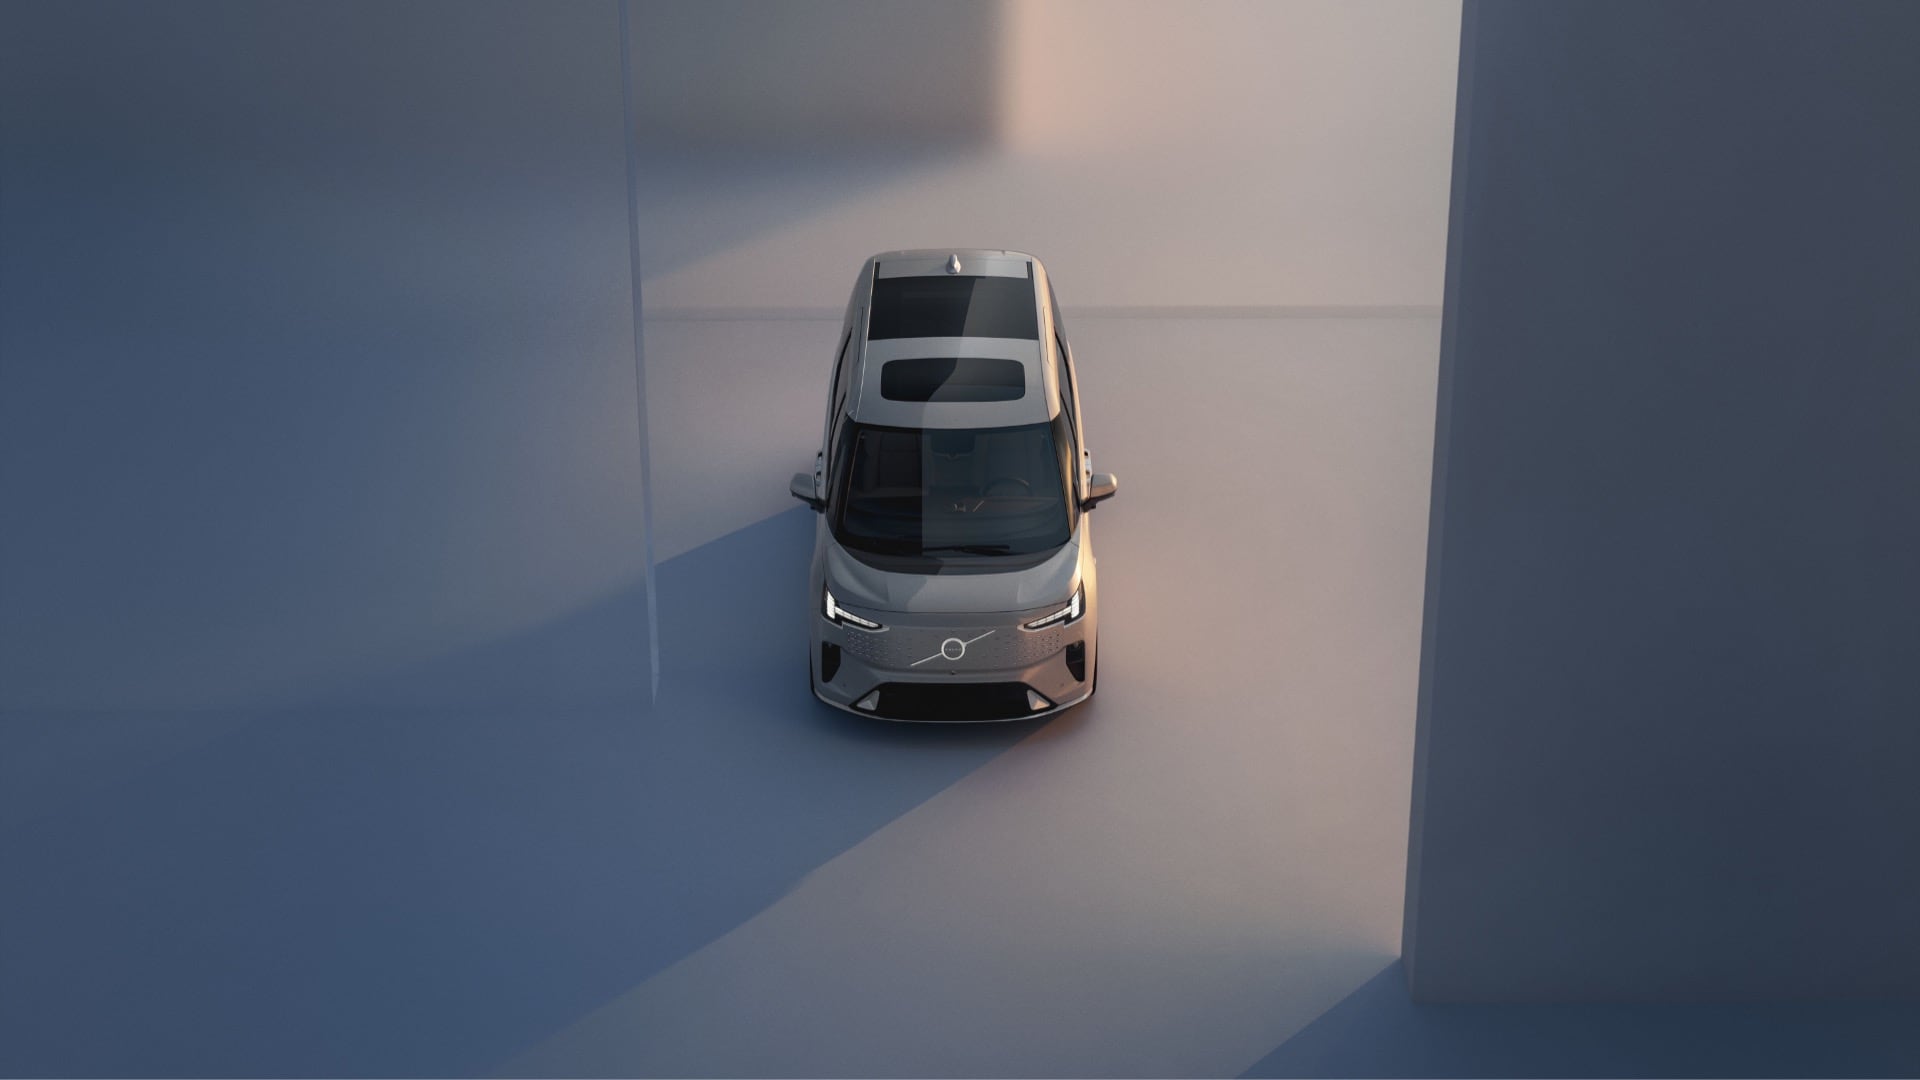 The new fully electric EM90 premium MPV further expands Volvo Cars'  portfolio